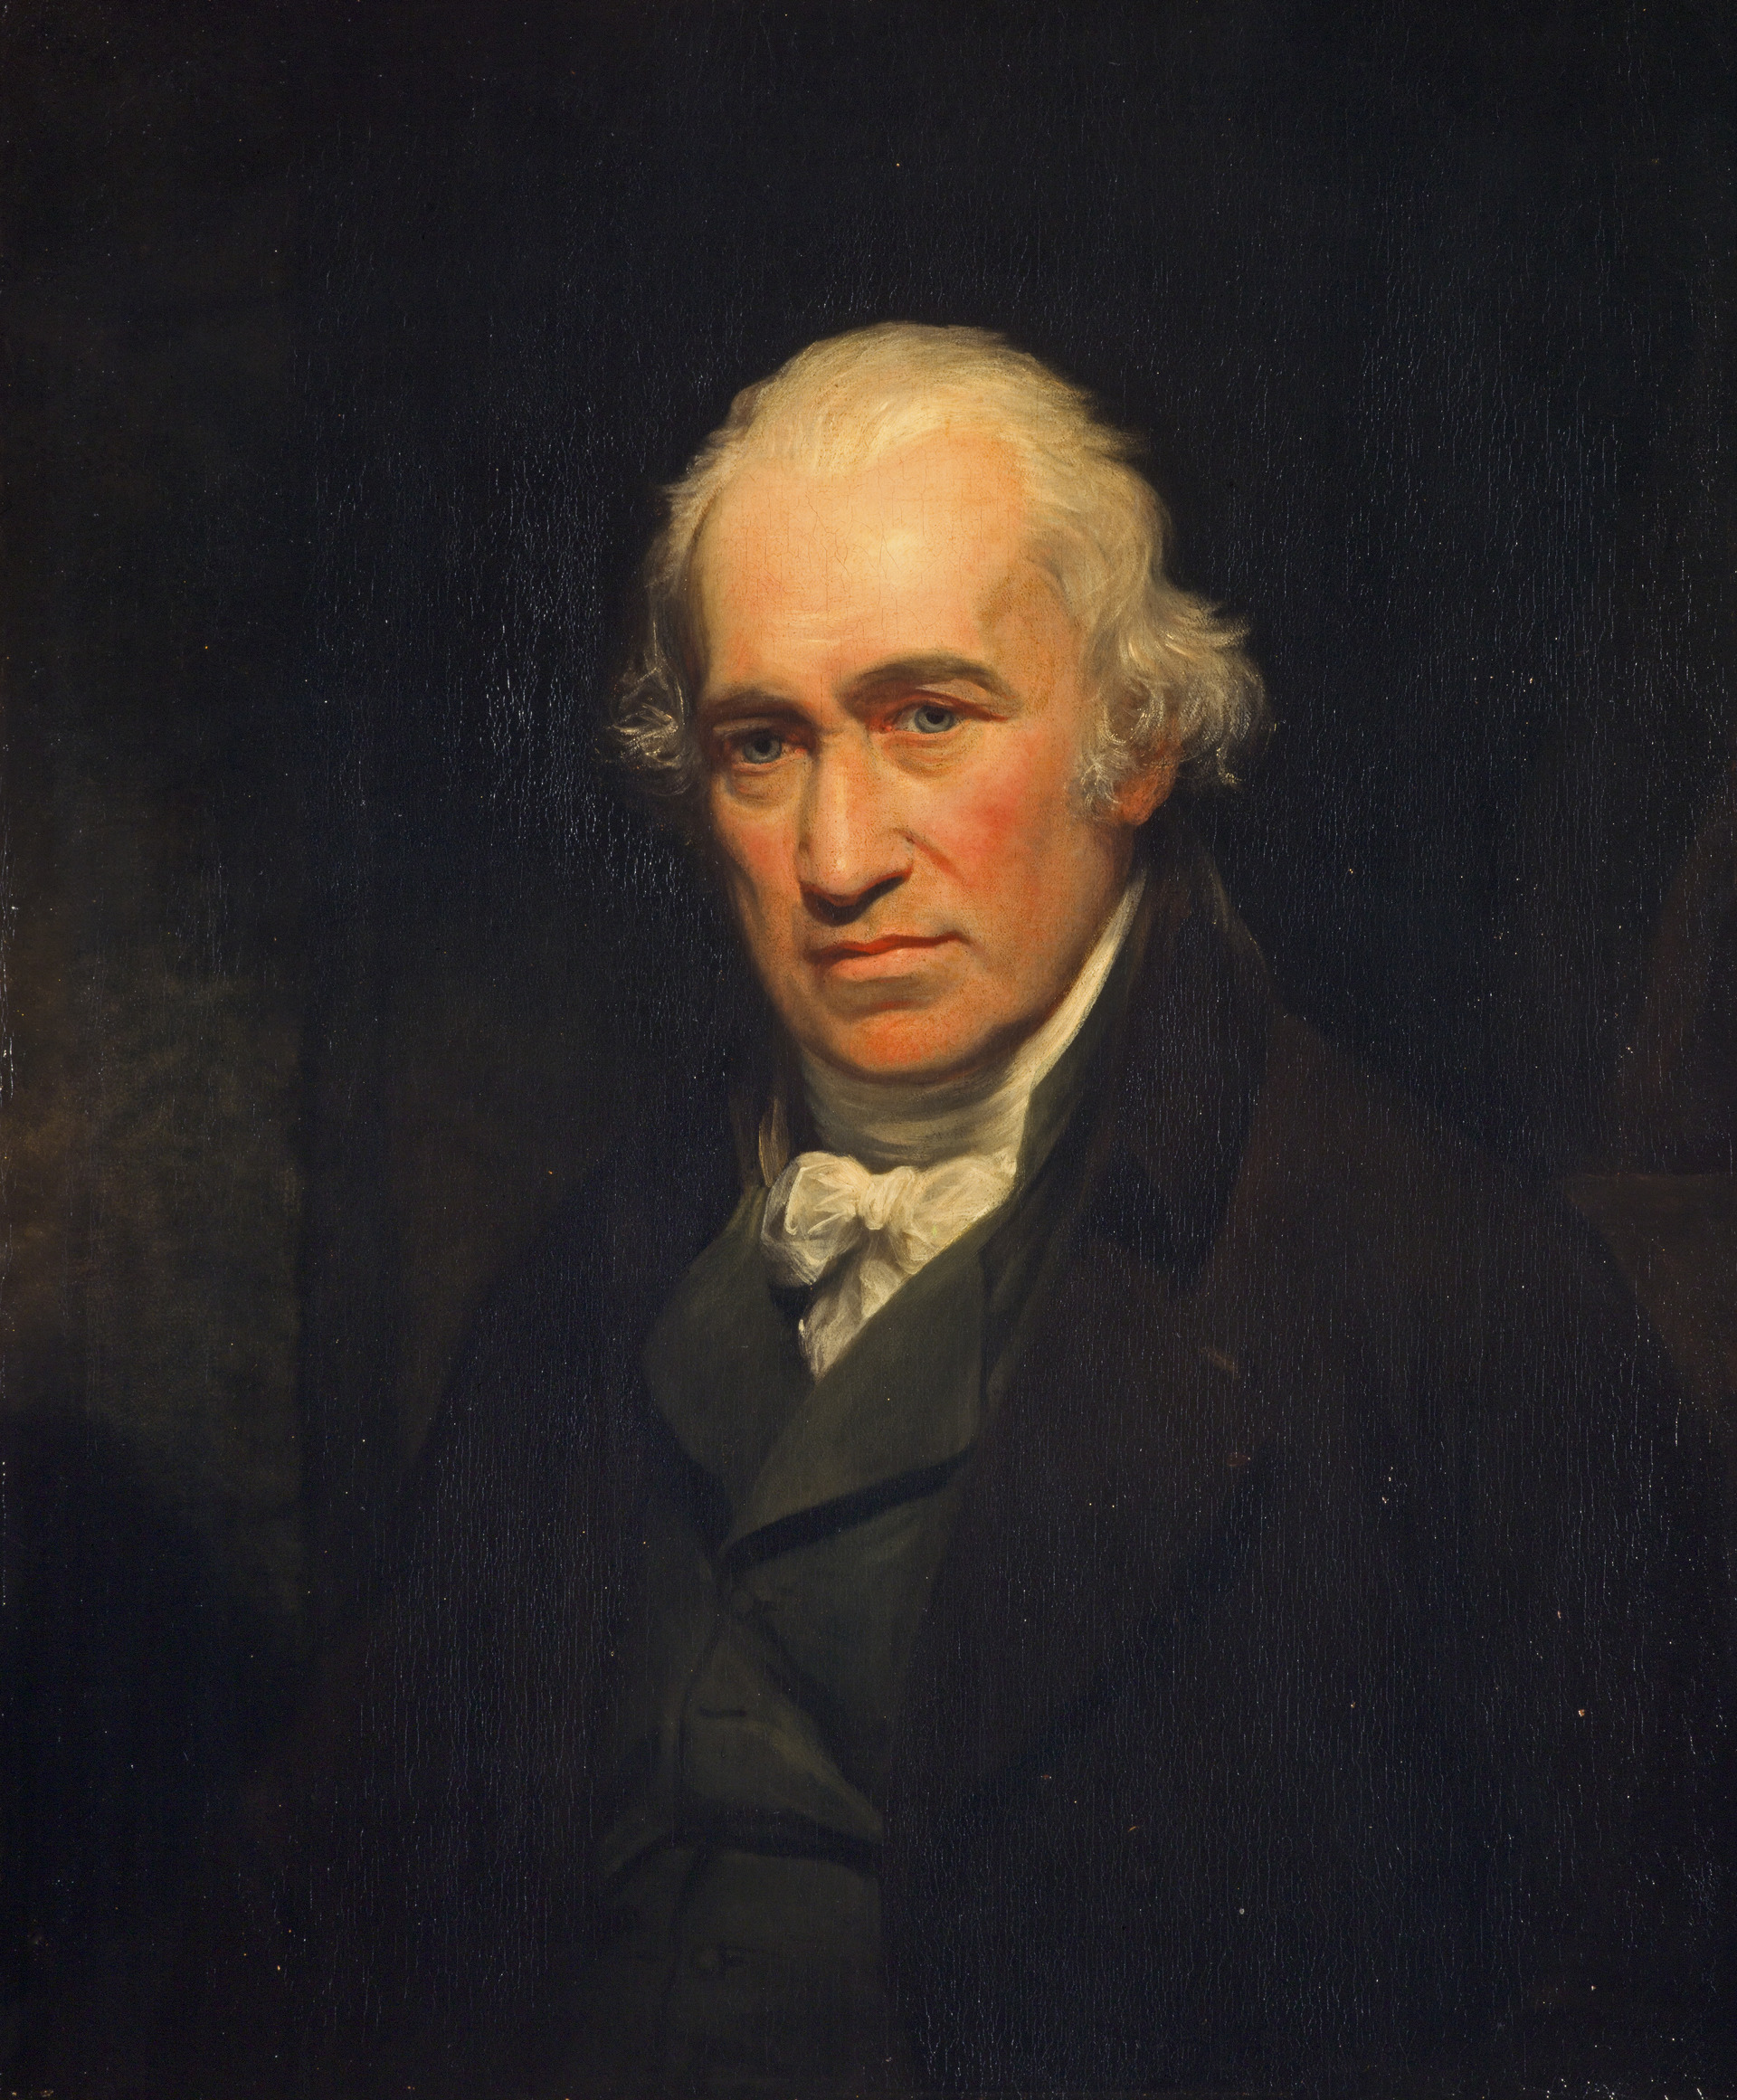 File:James-watt-1736-1819-engineer-inventor-of-the-stea.jpg - Wikimedia ...